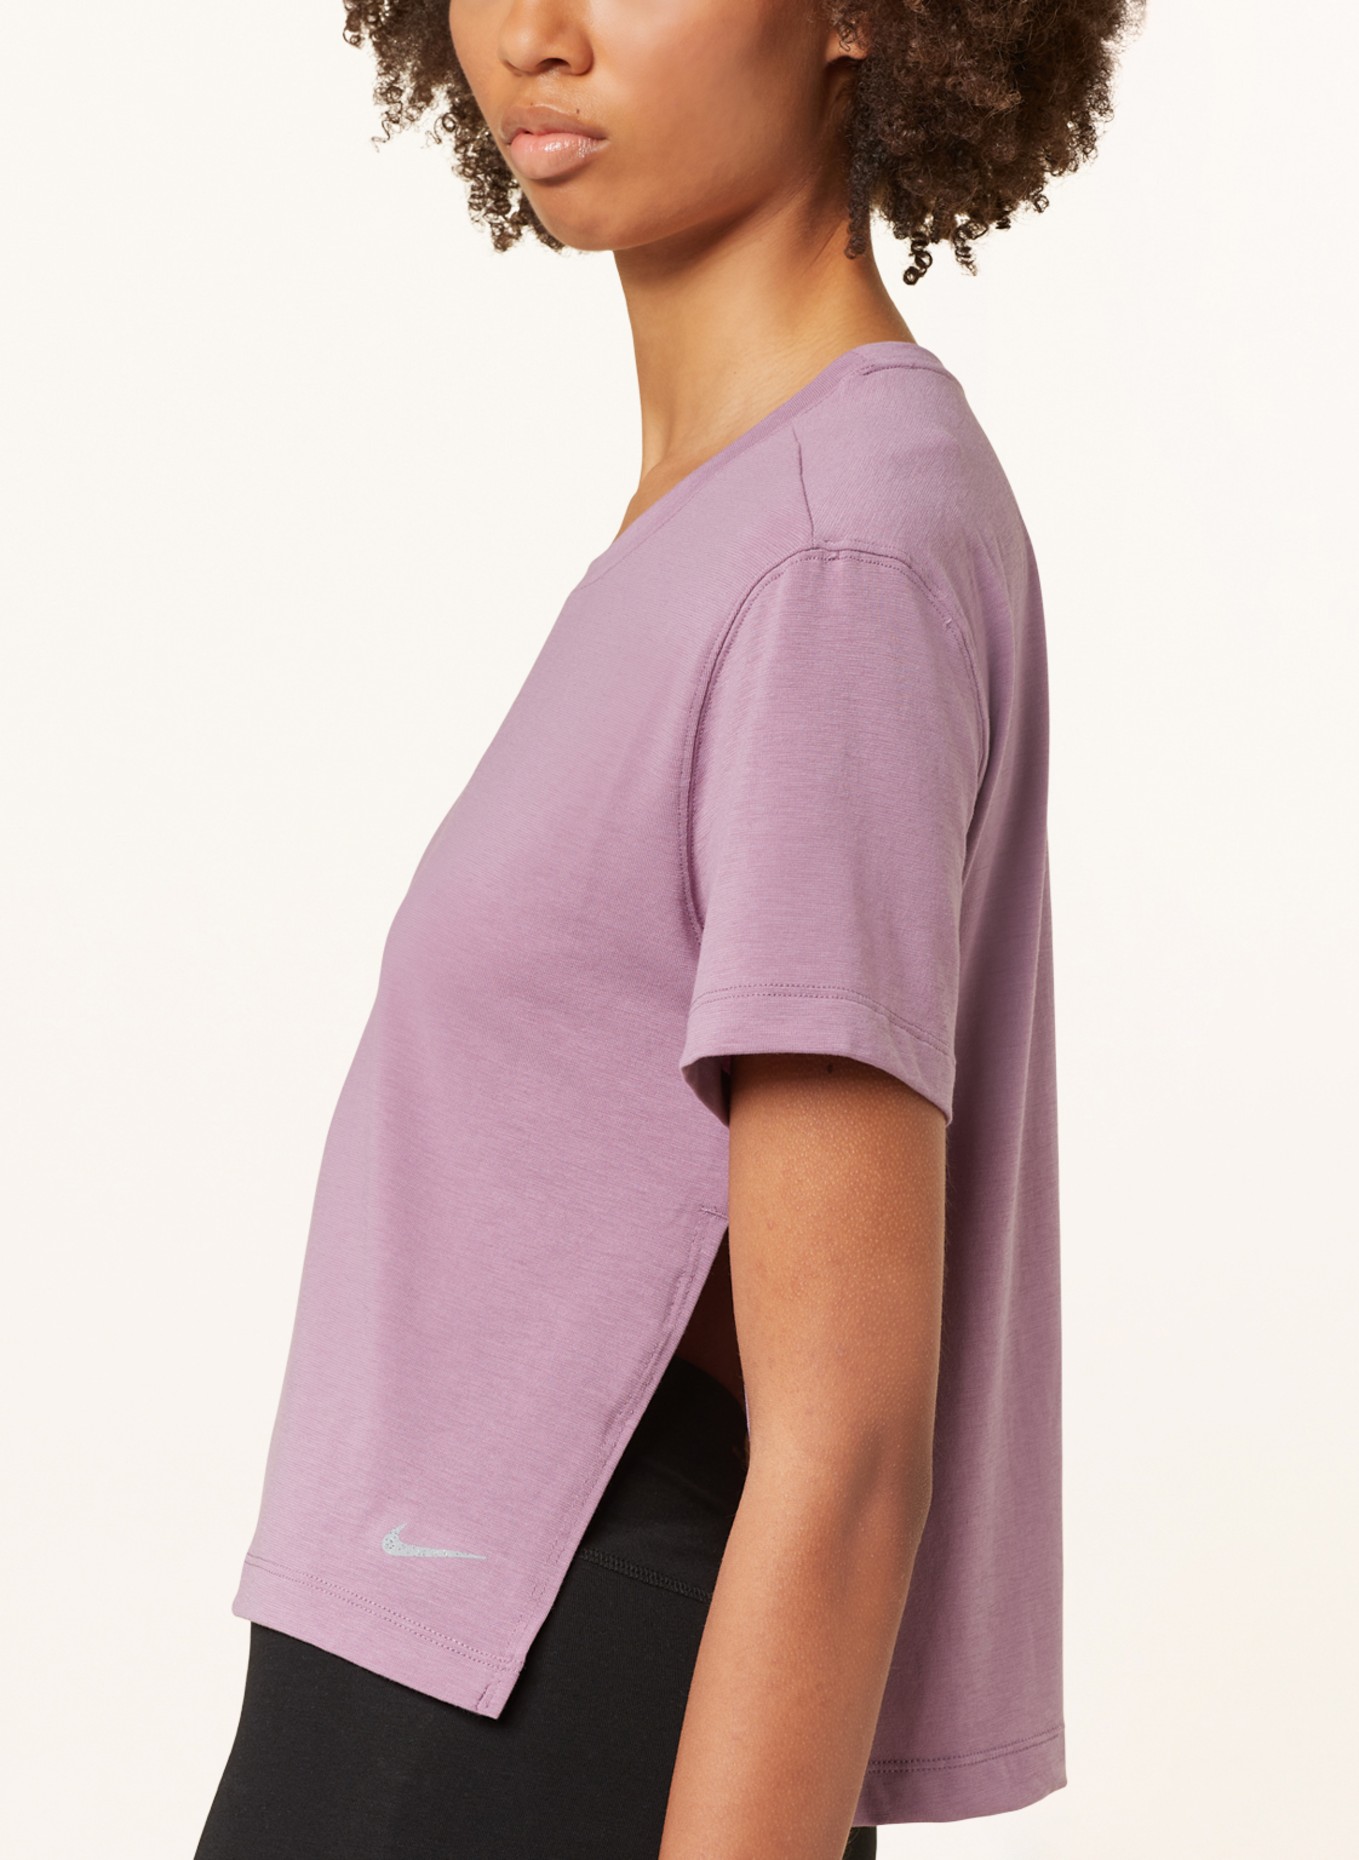 Nike T-shirt YOGA DRI-FIT in light purple